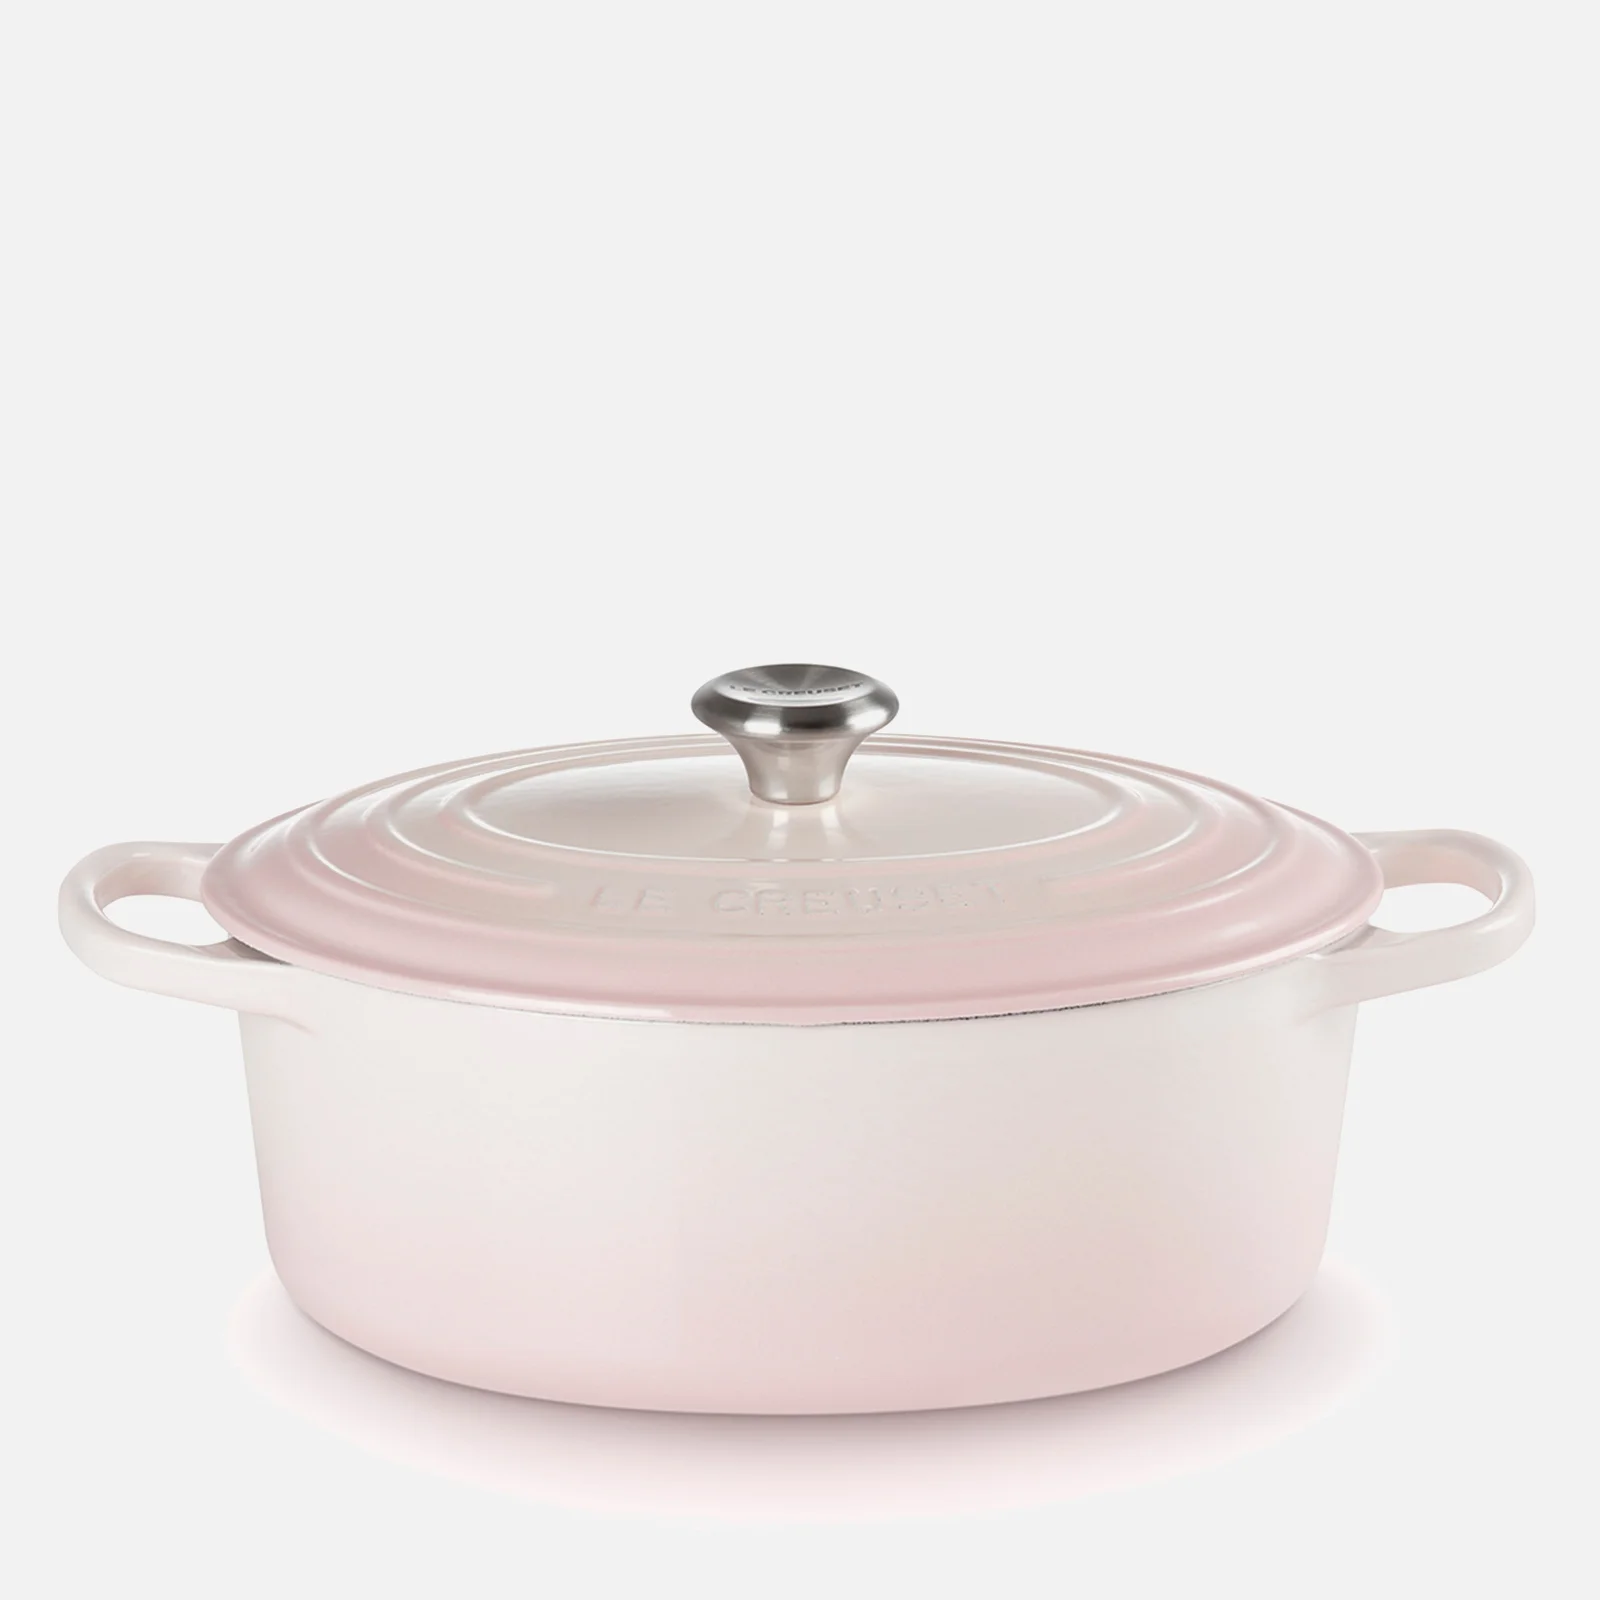 Le Creuset Signature Cast Iron Oval Casserole Dish - 29cm - Shell Pink Image 1